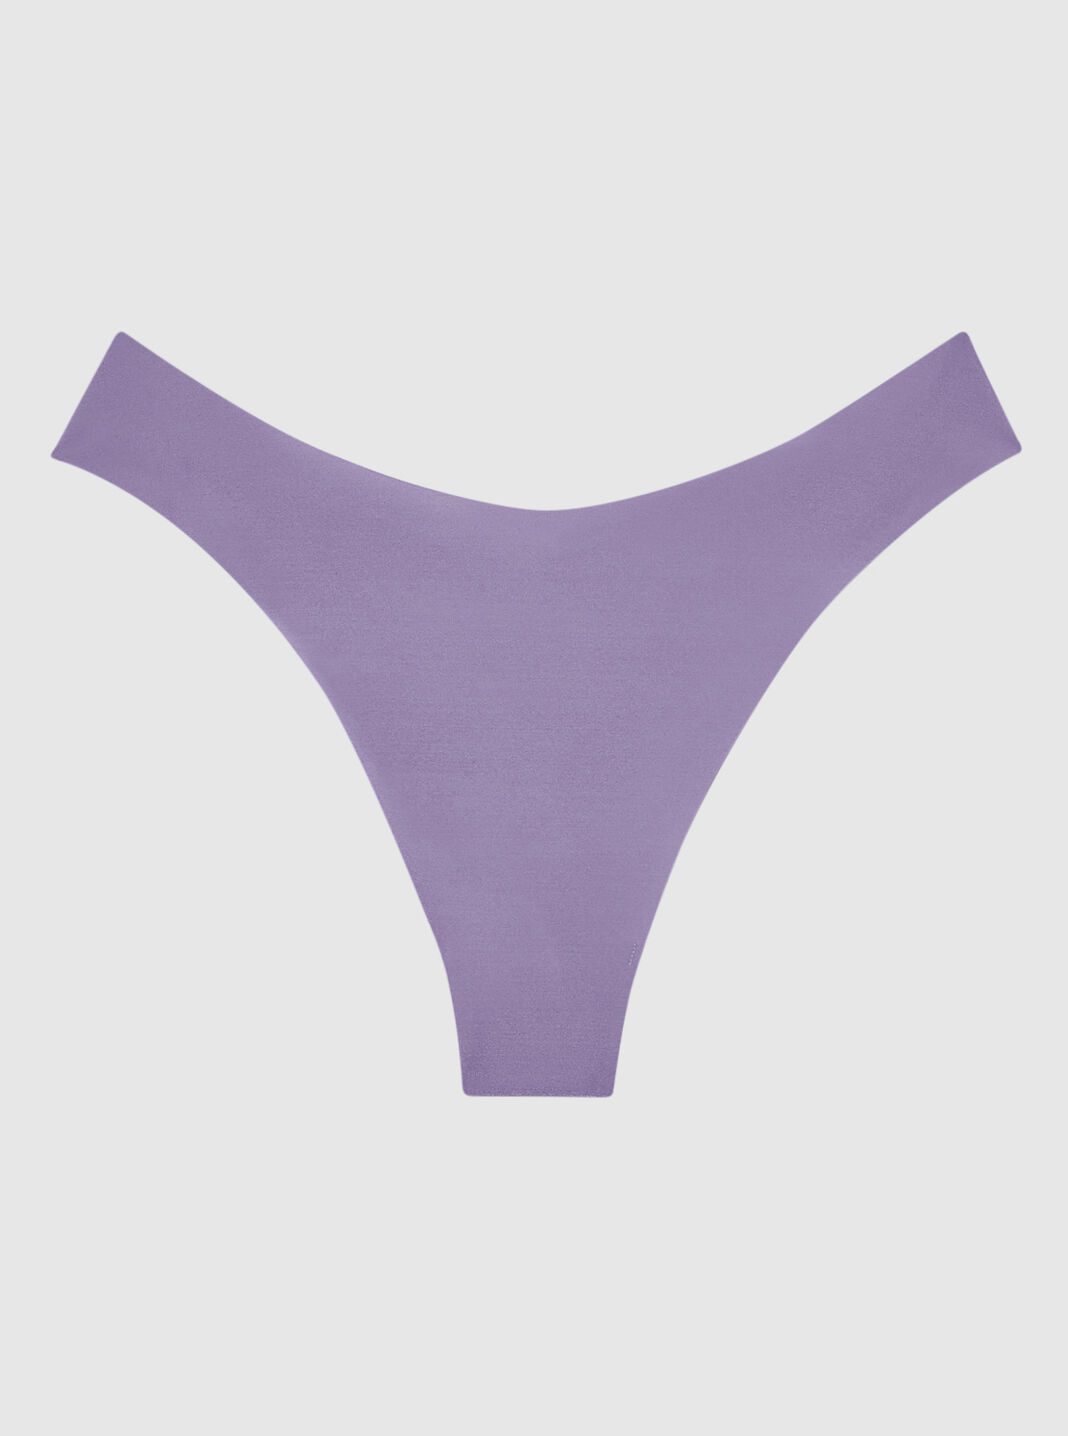 Buy EMBEK Underwear Women Seamless Invisible Thong Panties